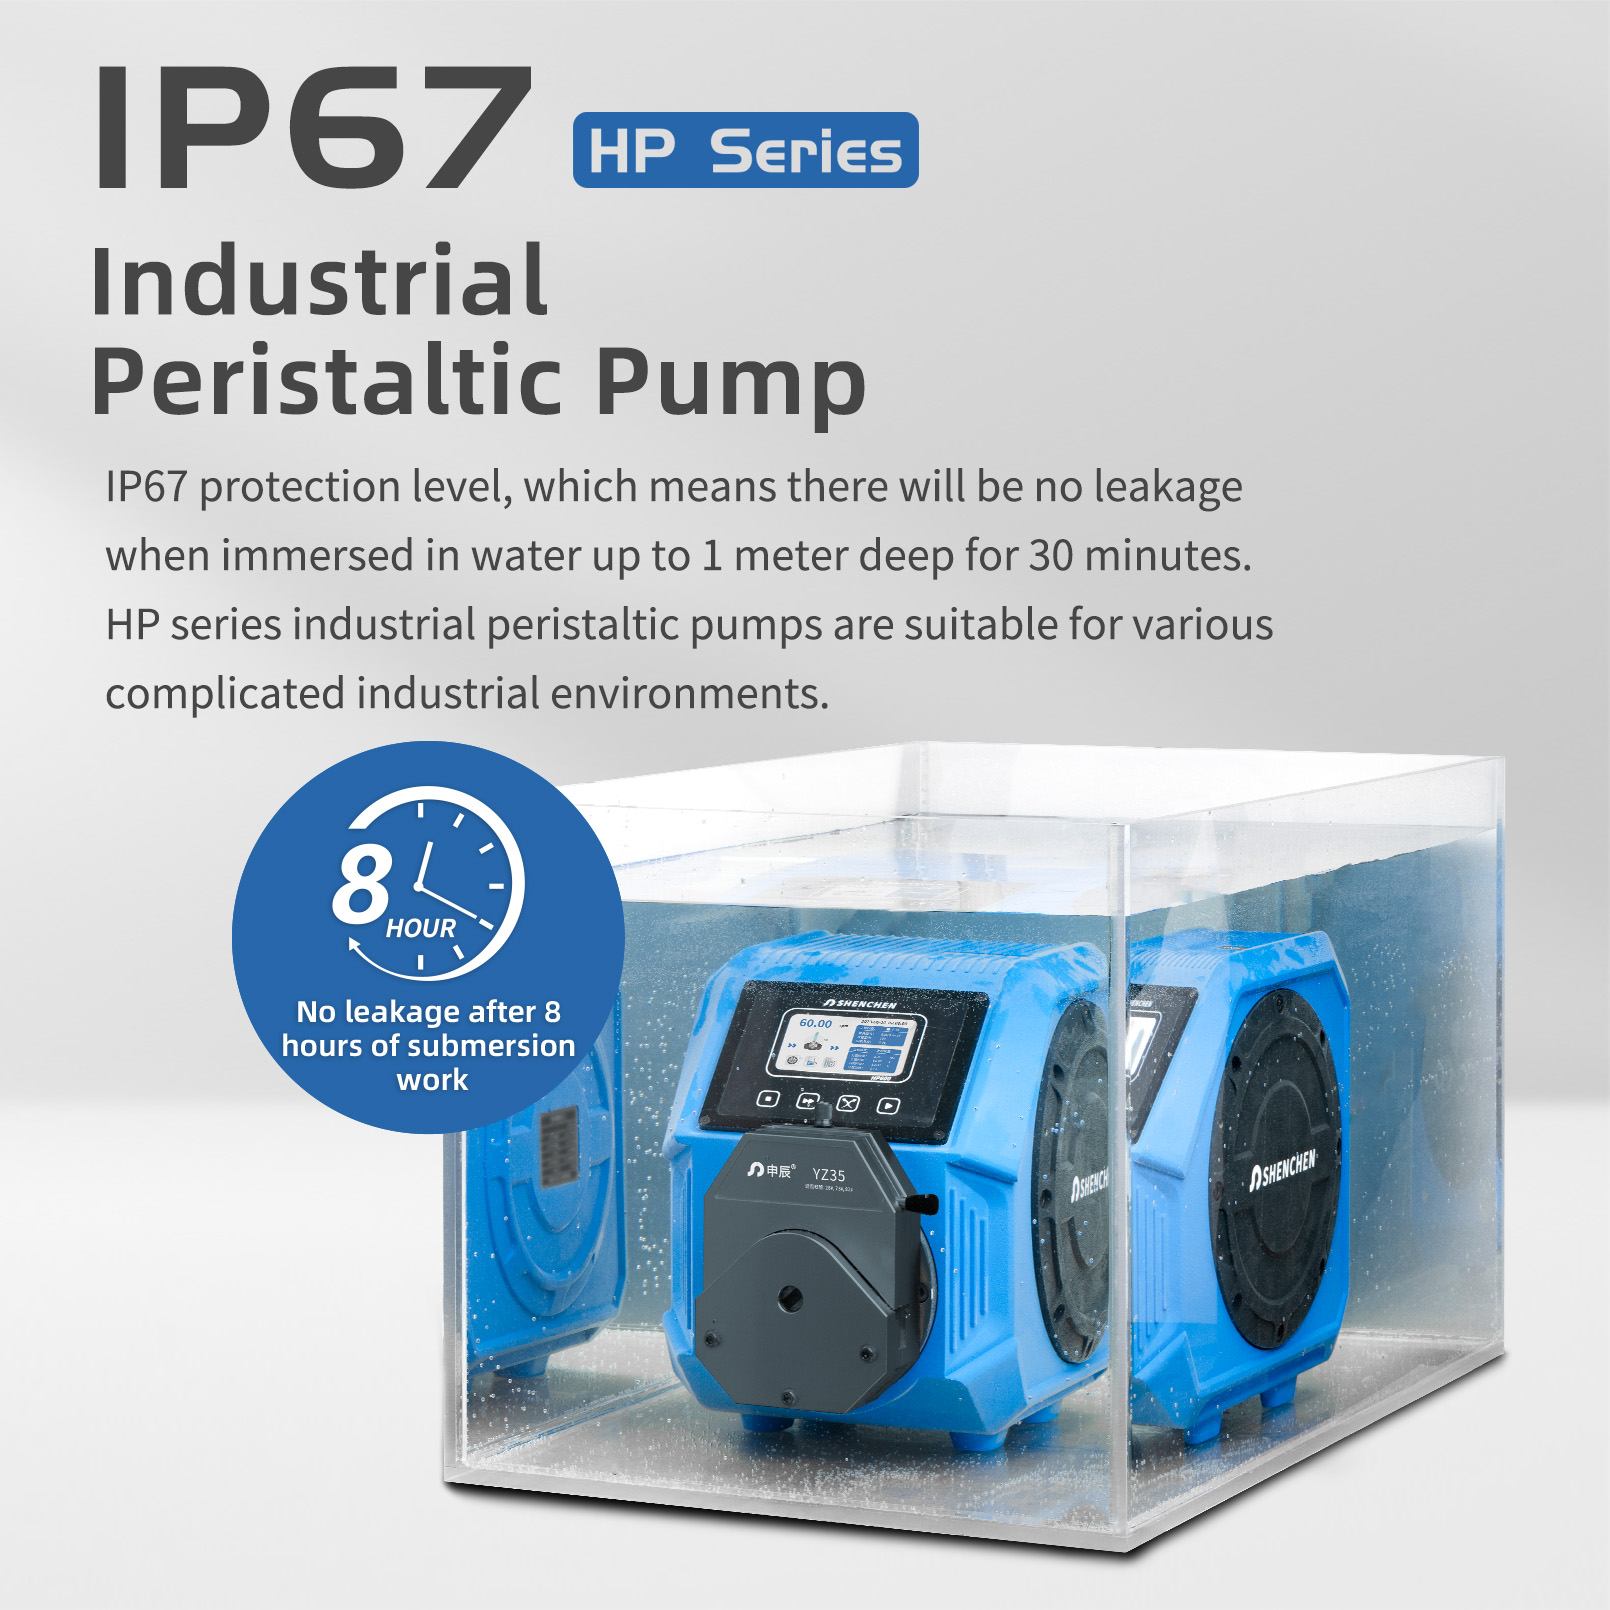 IP67 Industrial Peristaltic Pump